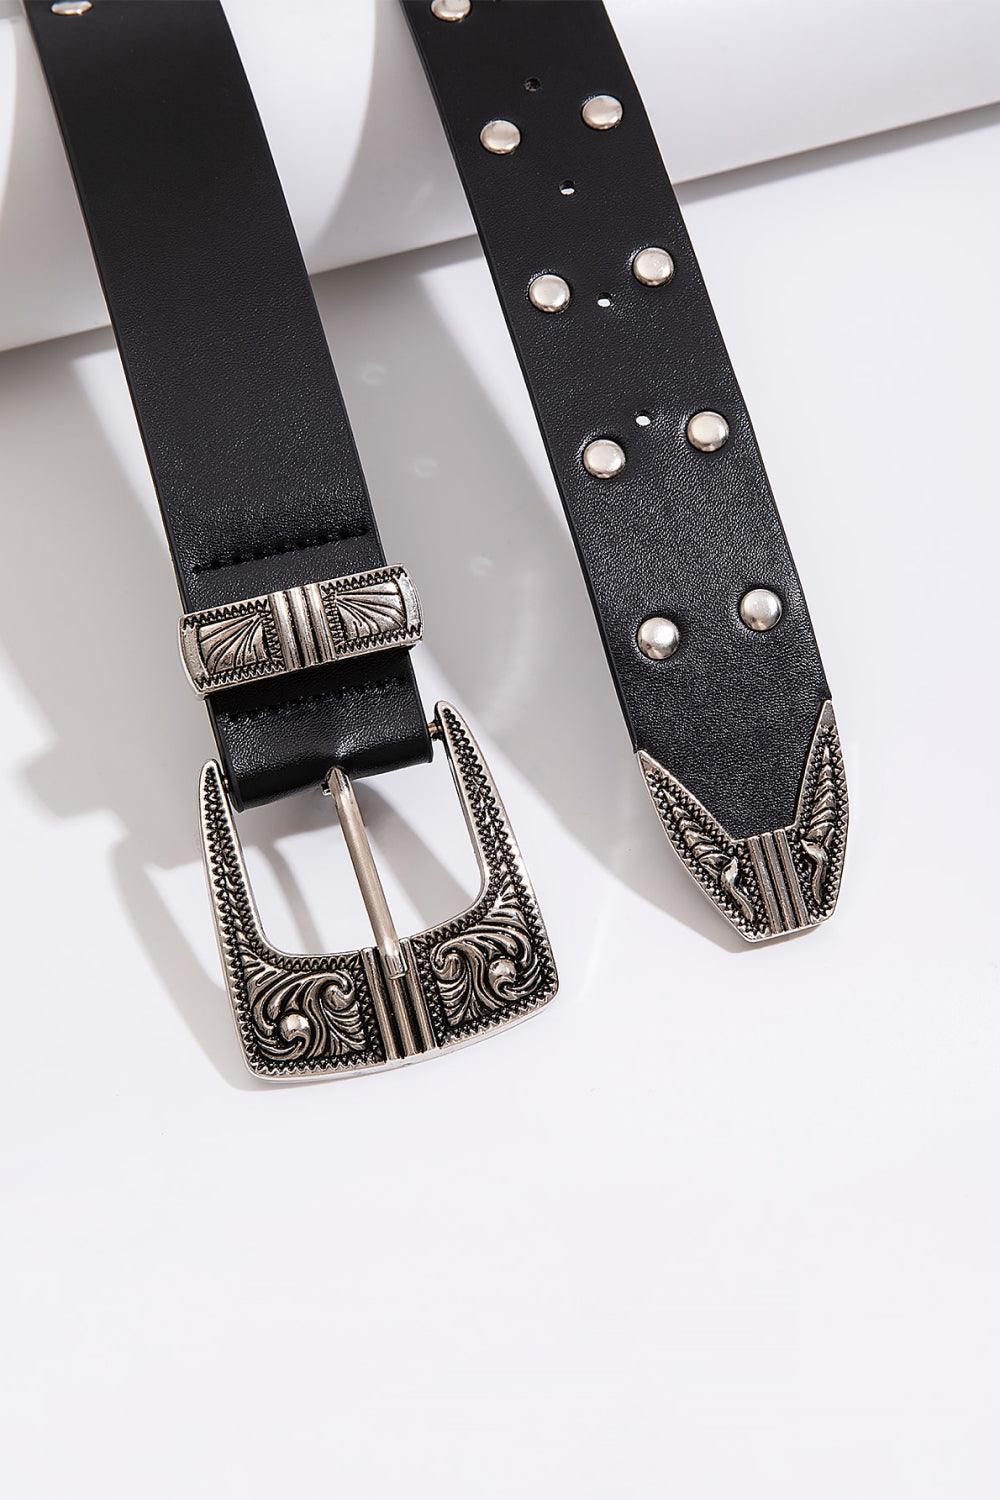 Fashion-Forward Double Row Black Studded Leather Belt - MXSTUDIO.COM